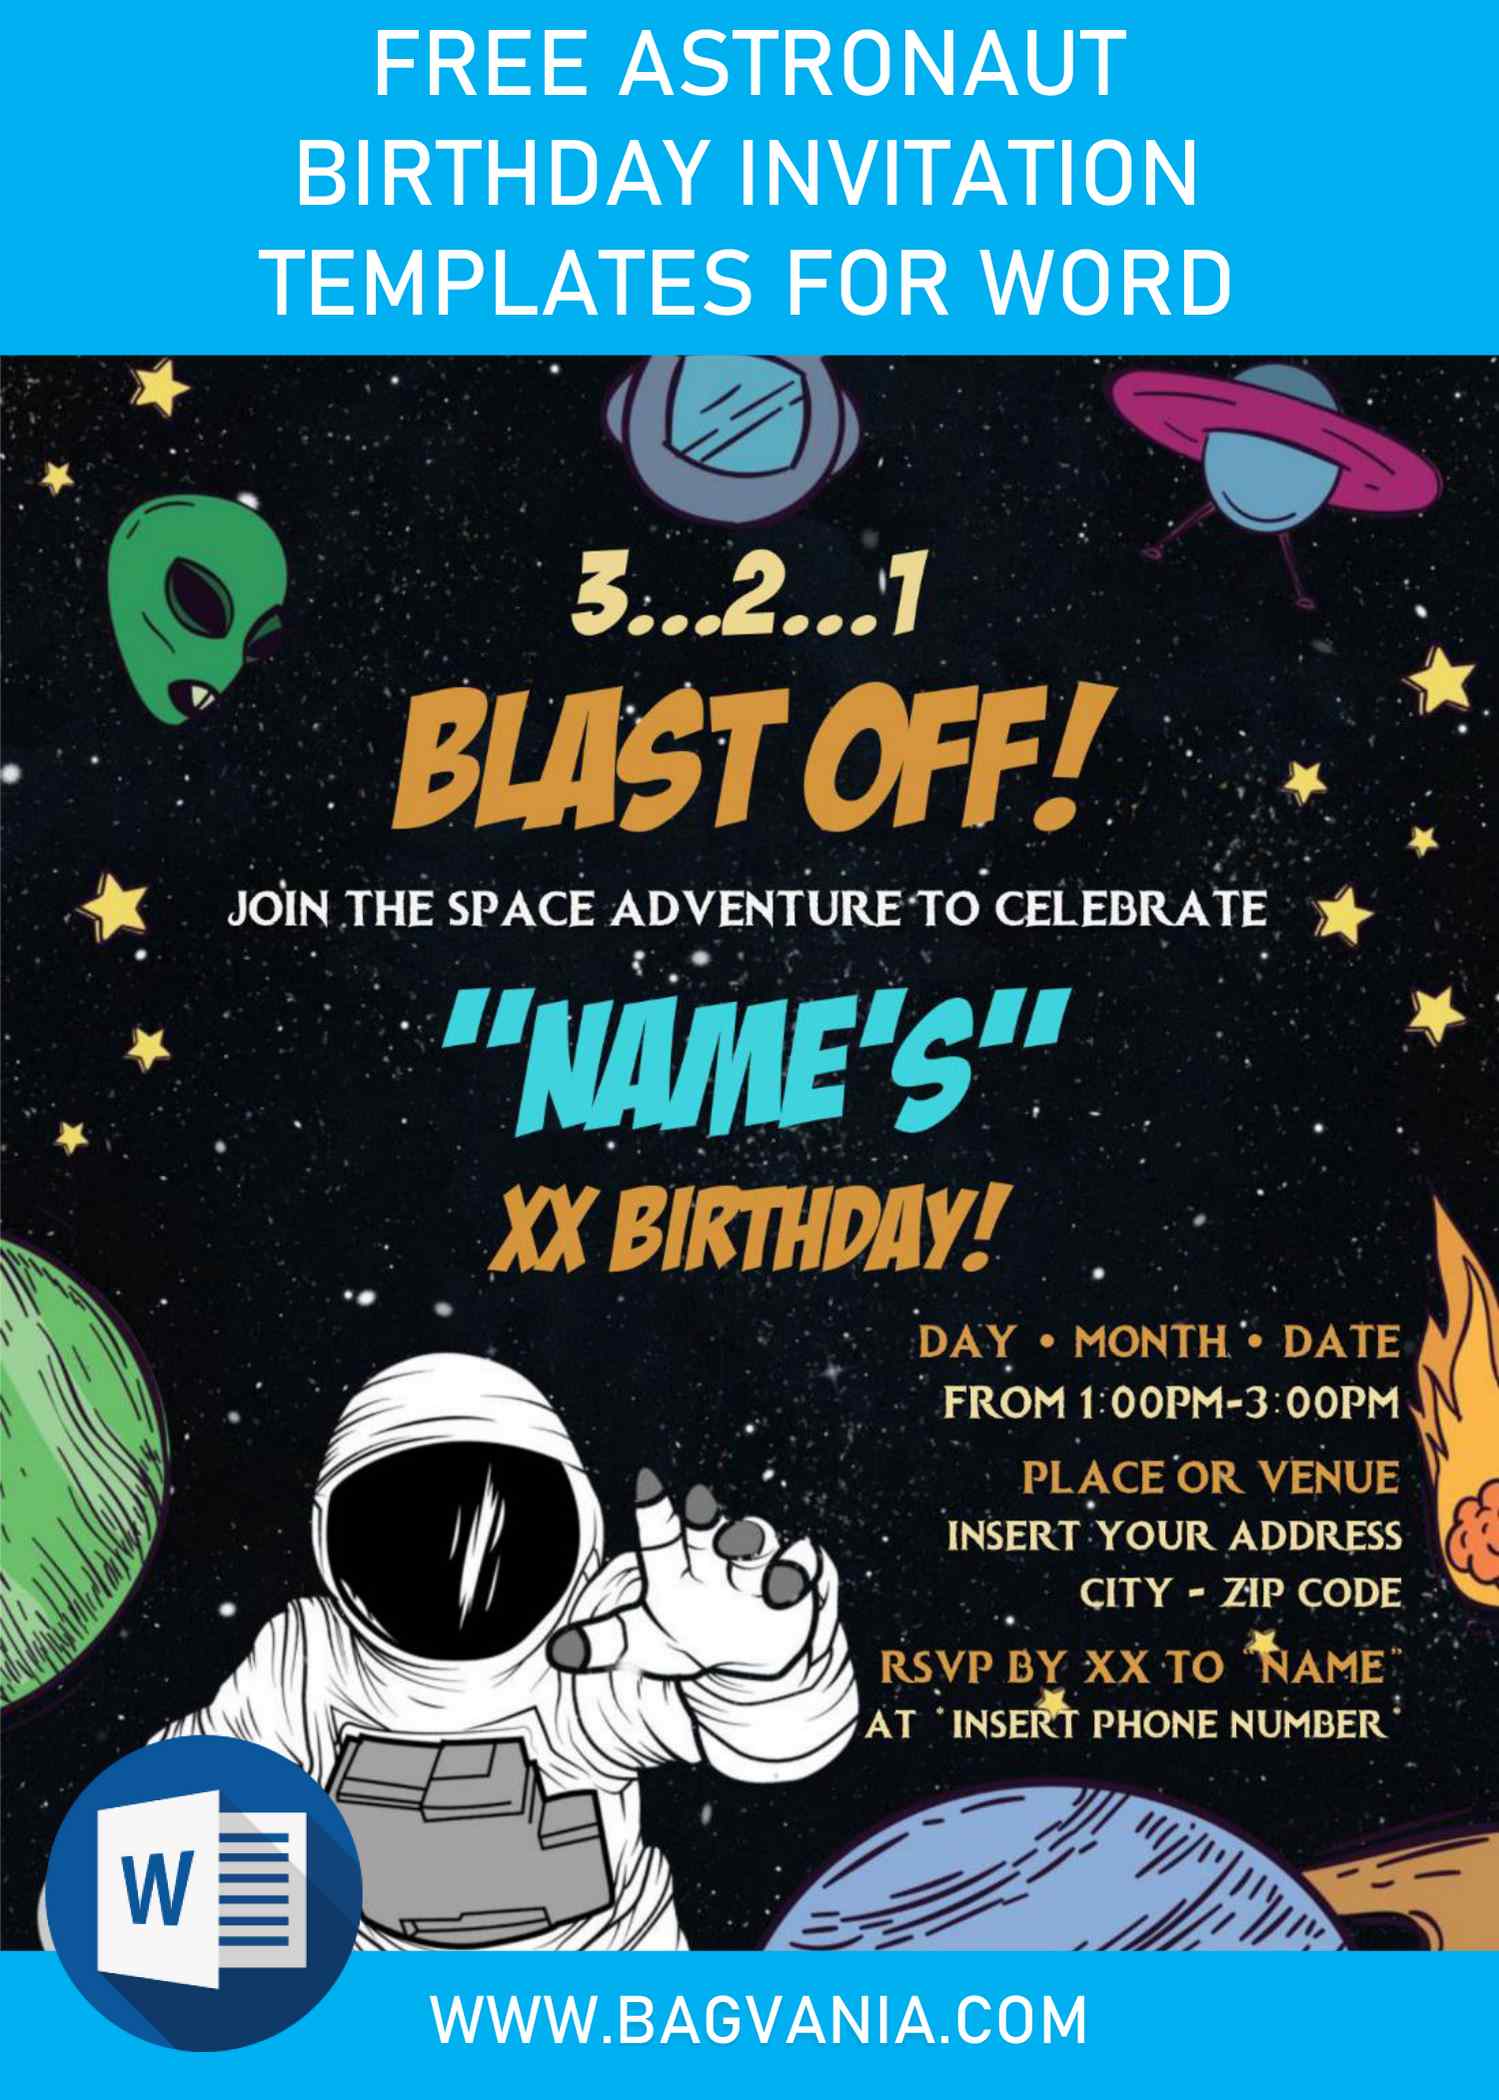 free astronaut birthday invitation templates for word | free